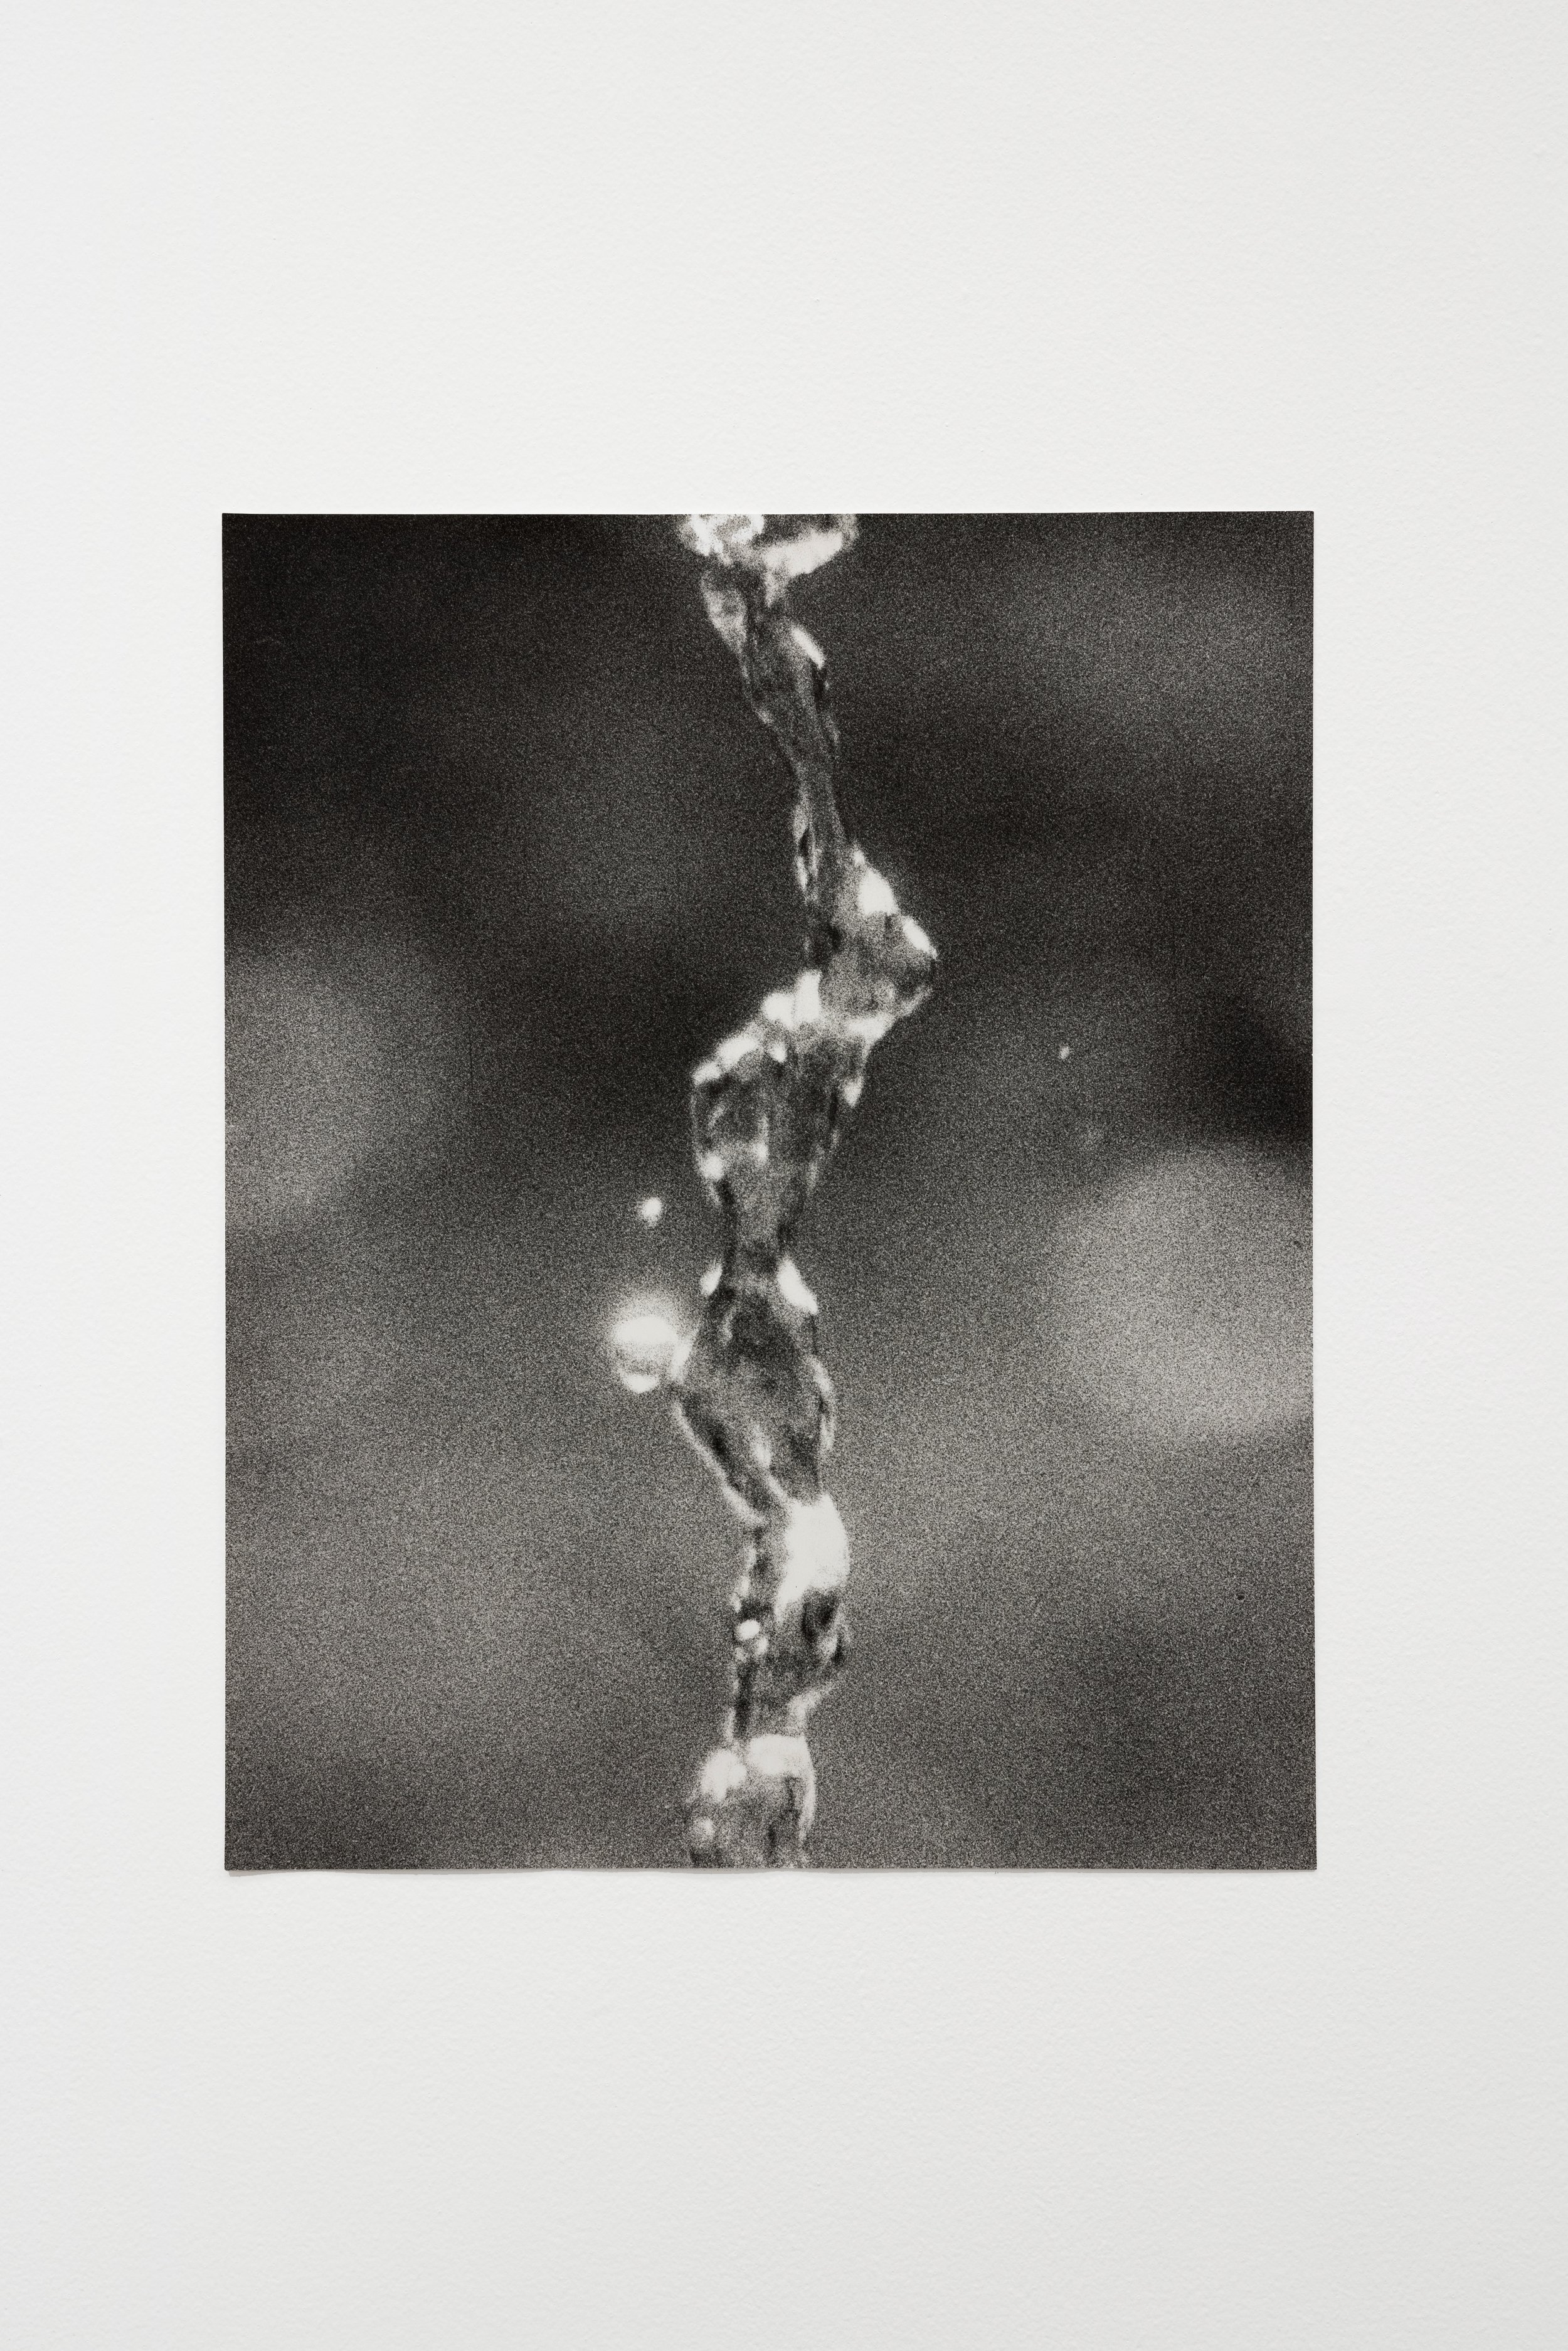  Falling Water, 2022, 58 x 47 cm, silver gelatin print, edition 1/5  